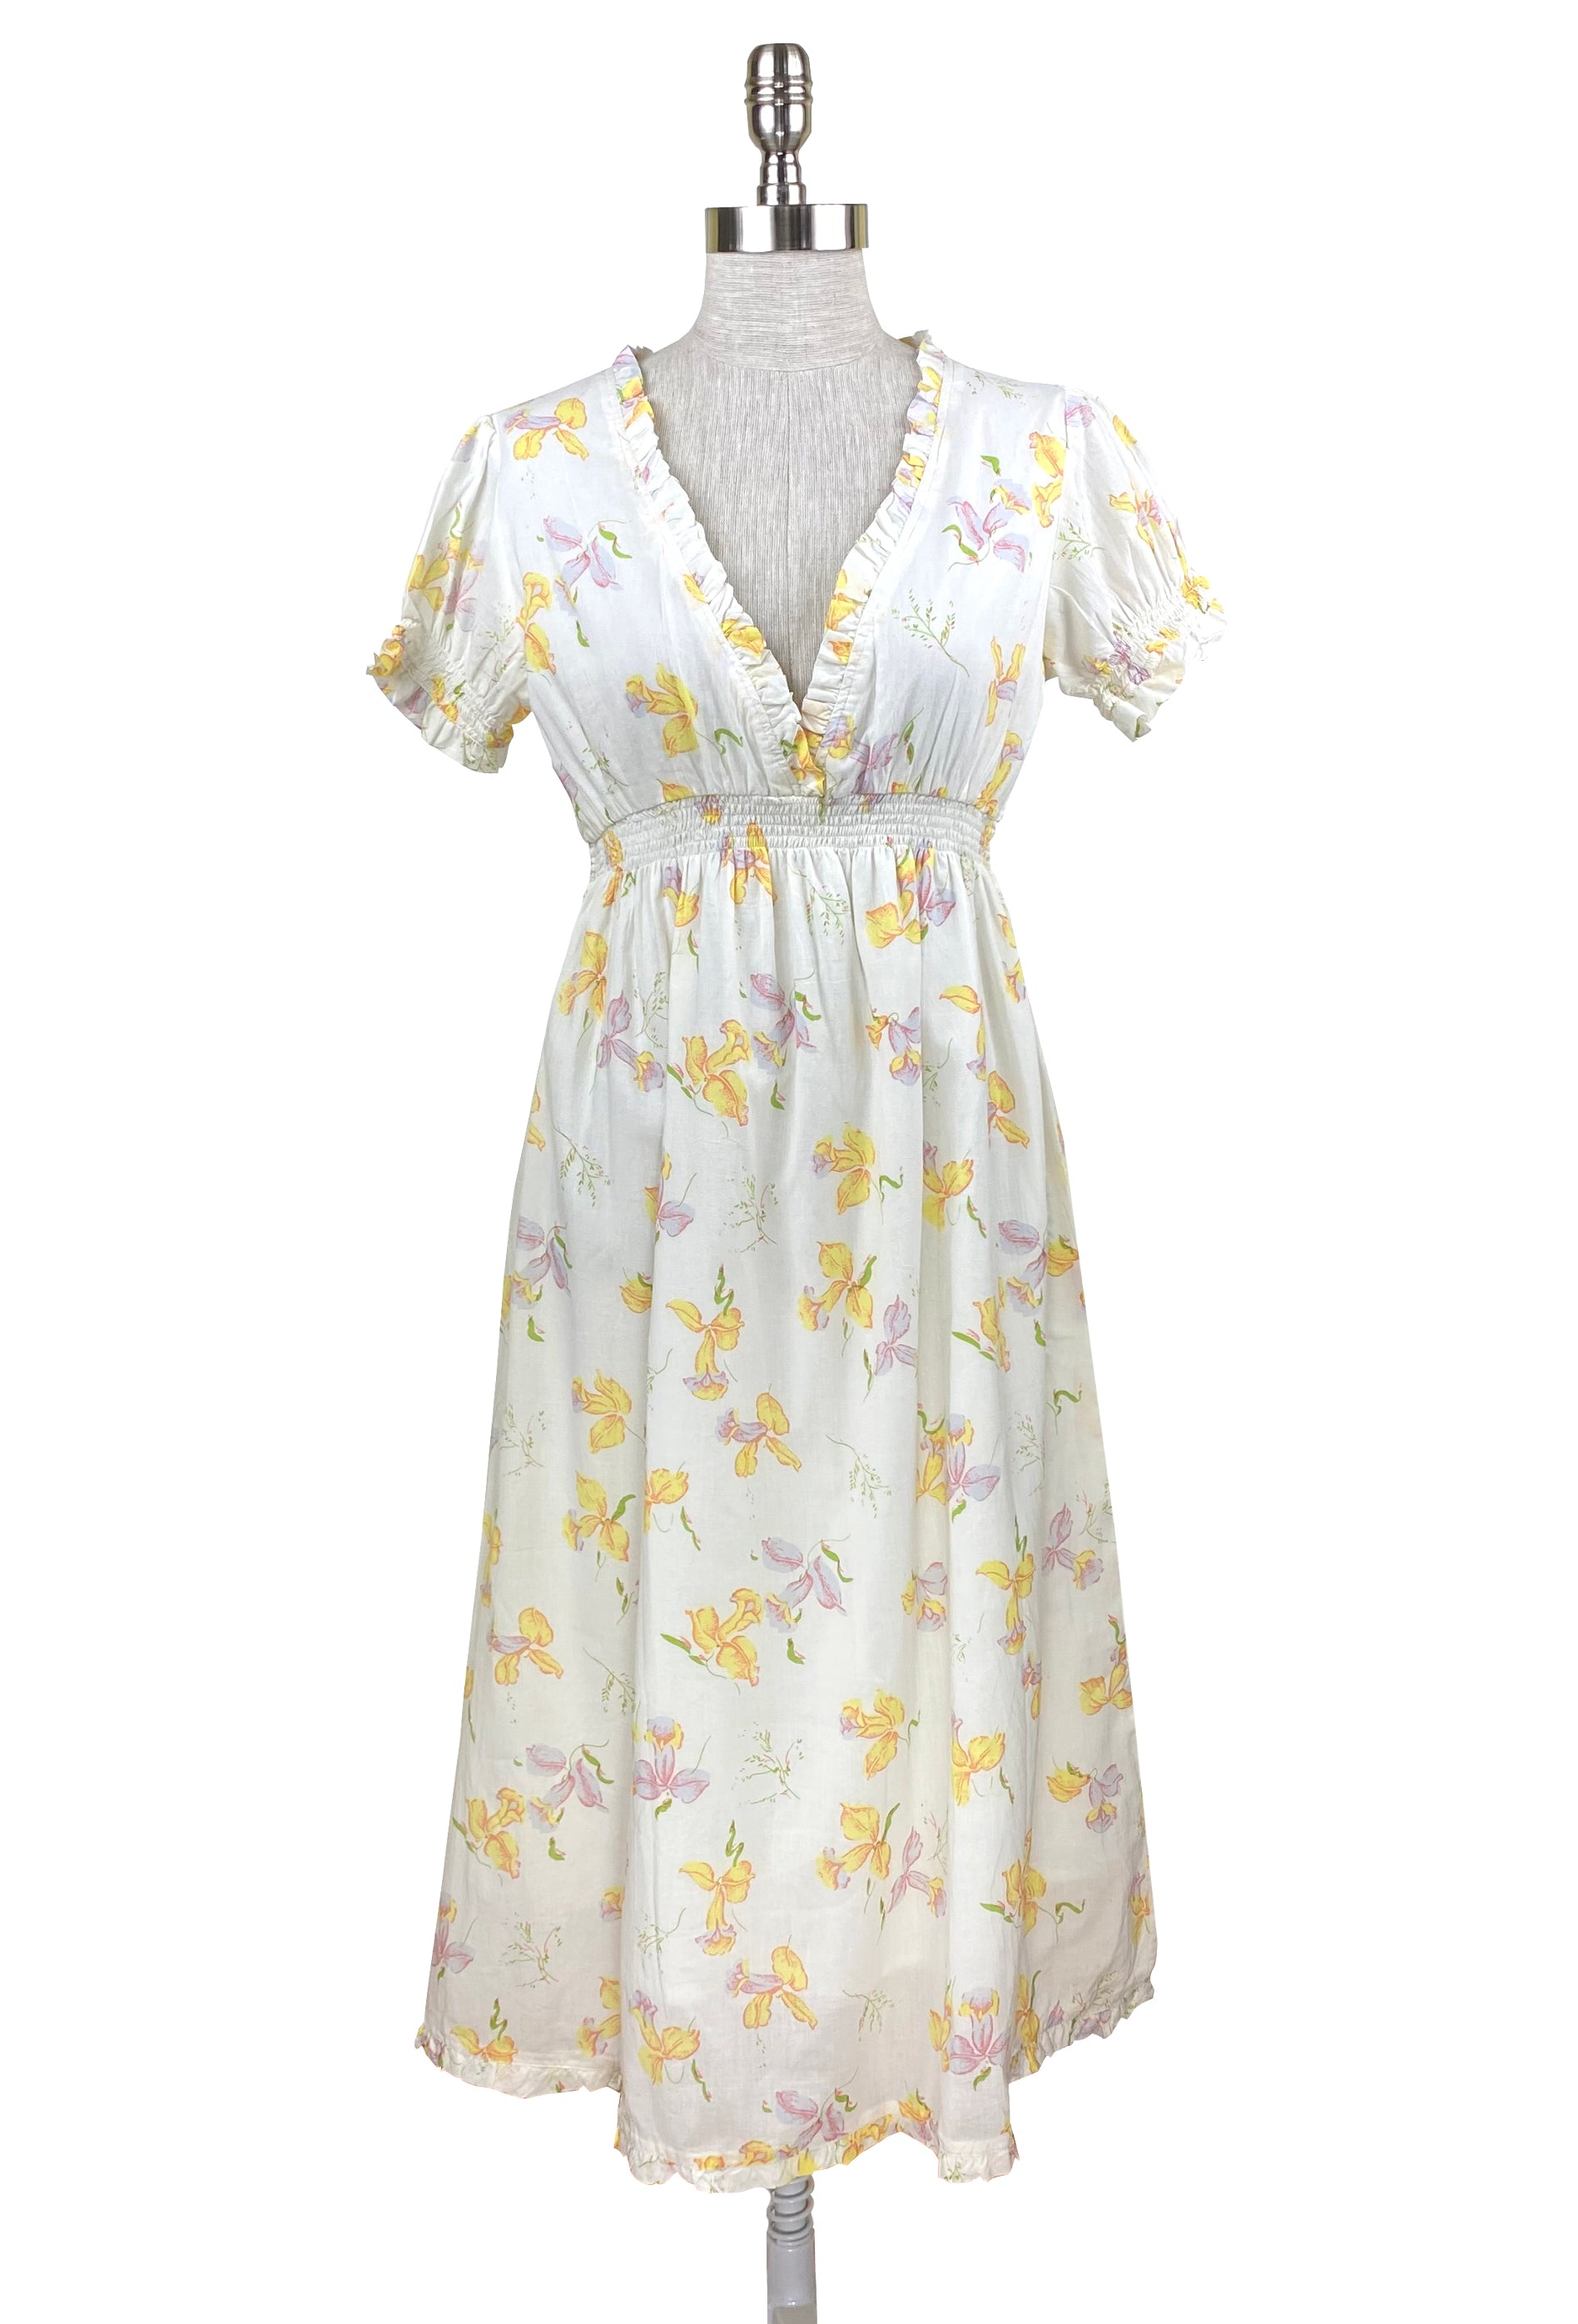 1930's Vintage Smocked Daffodil Print Empire Dress - White - J. Marin